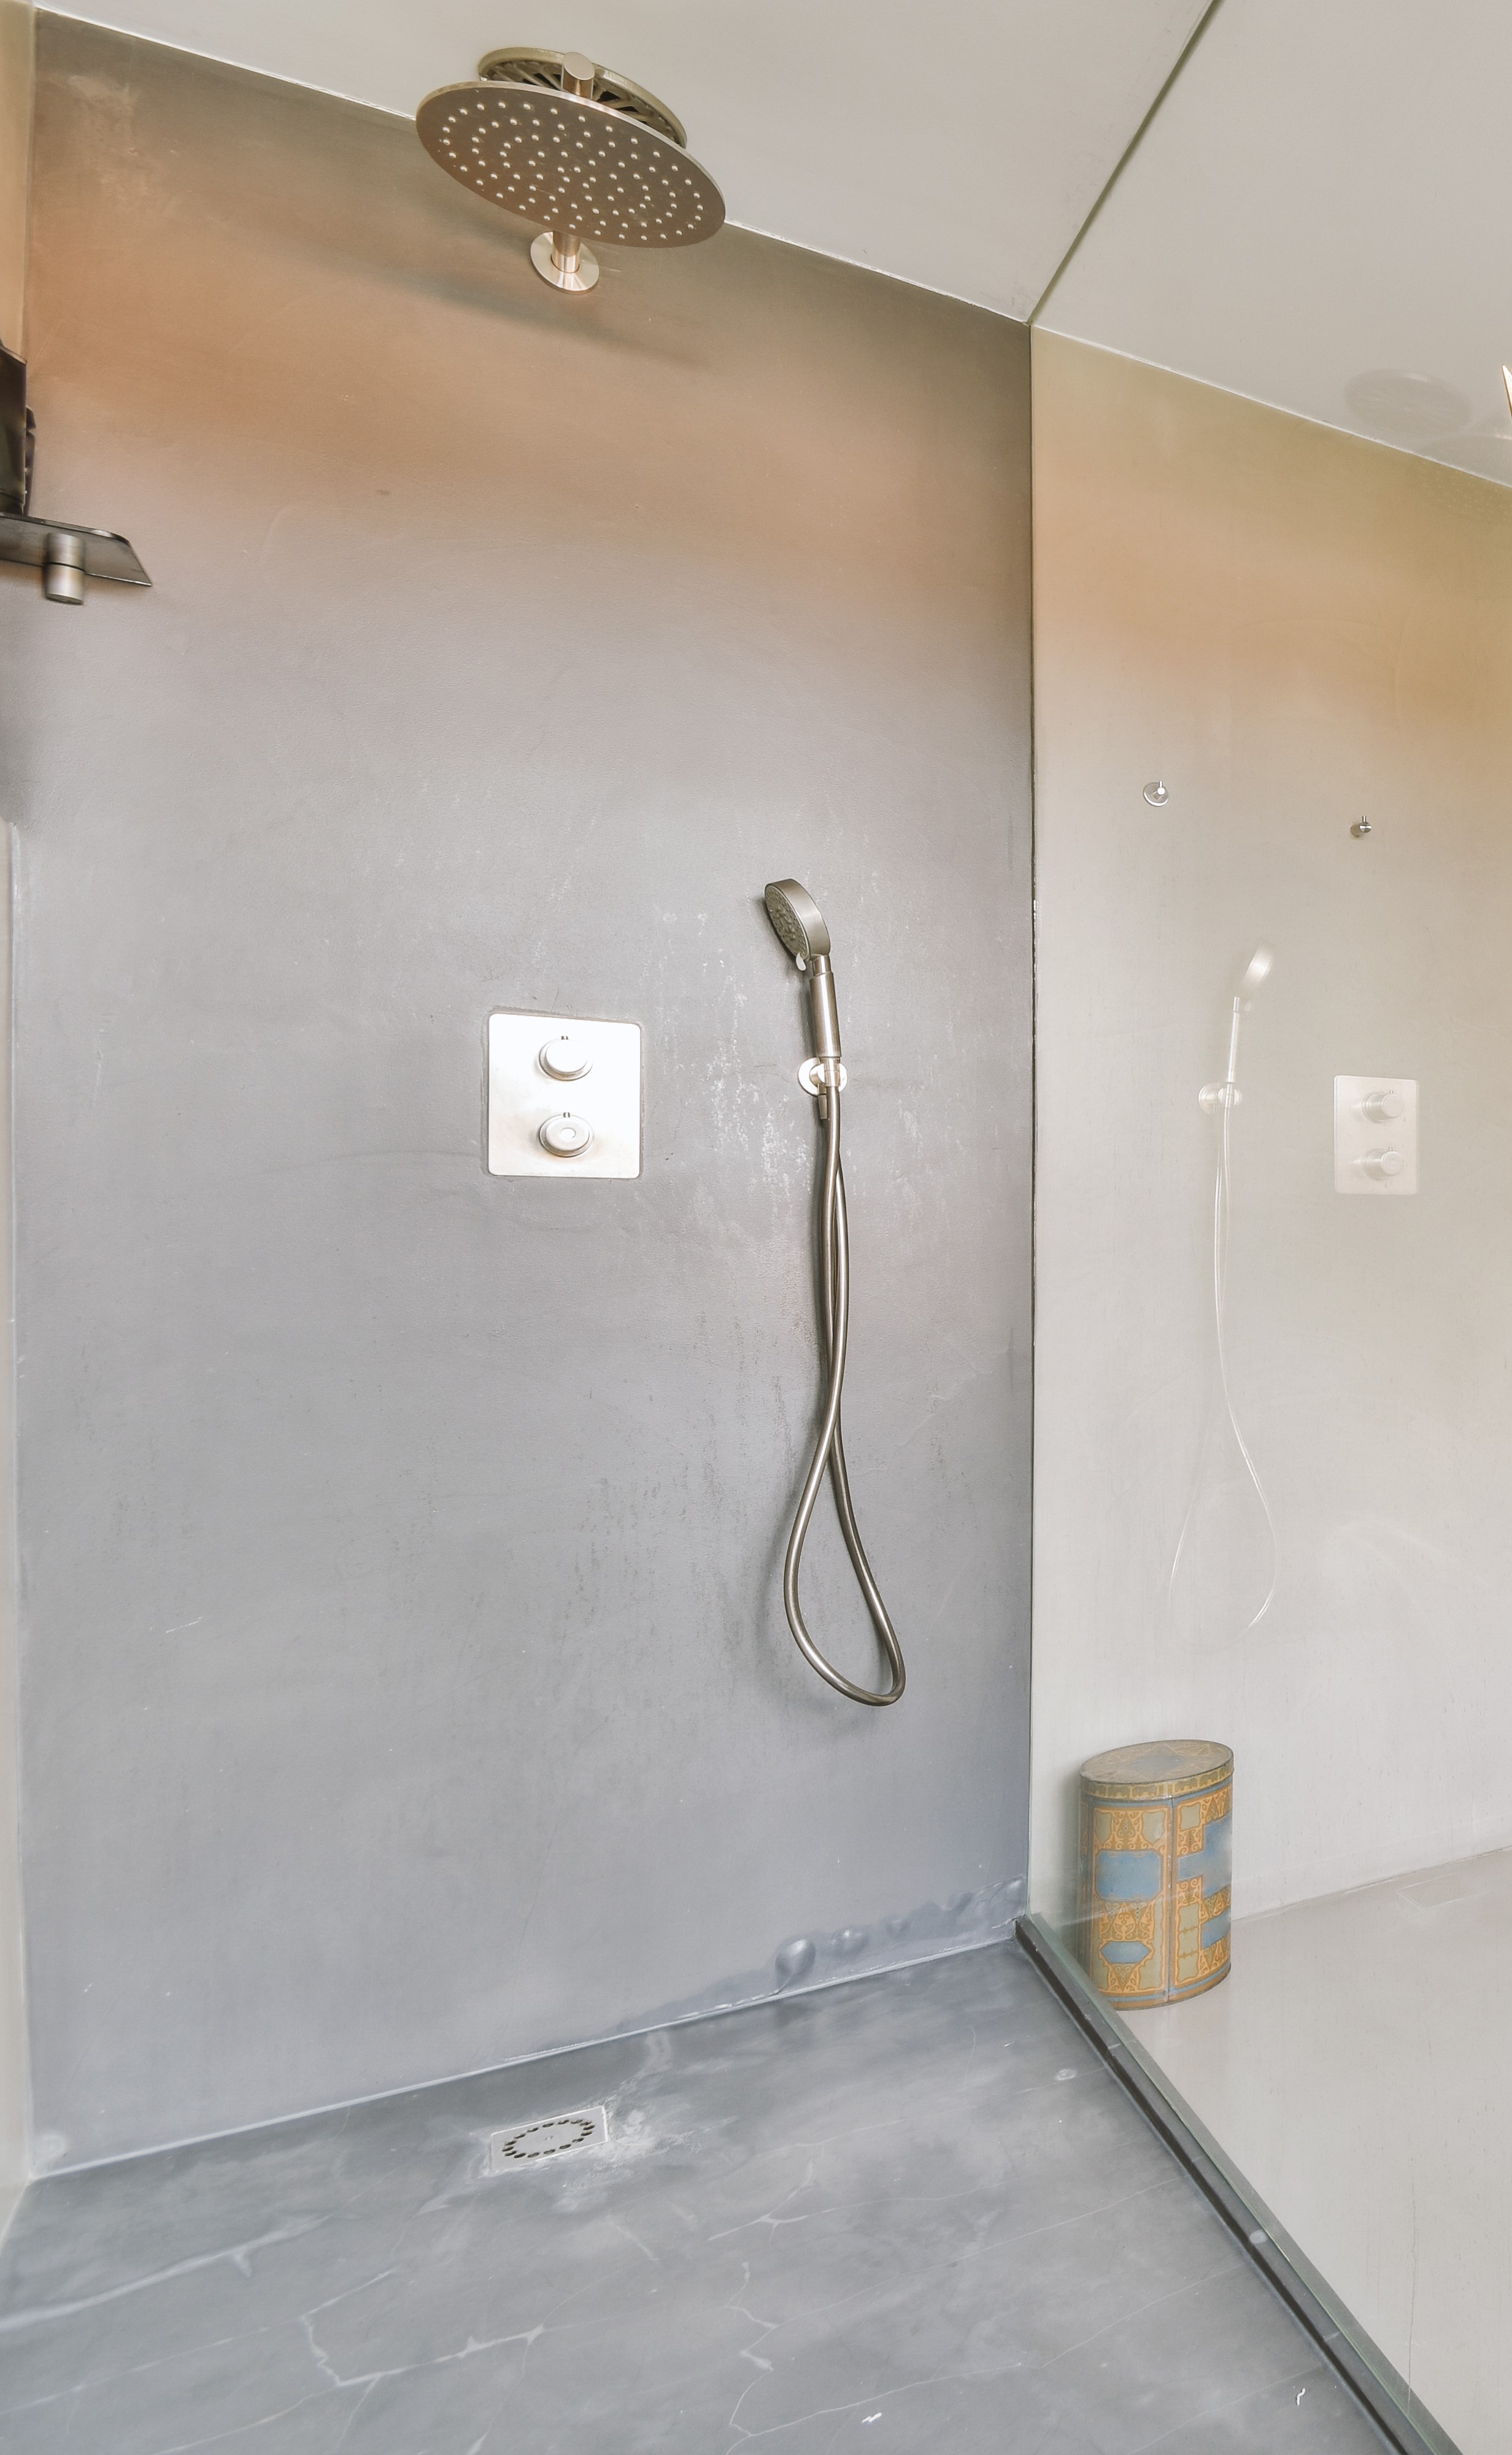 sinks-and-toilet-near-shower-cabin-2022-07-08-19-29-26-utc1